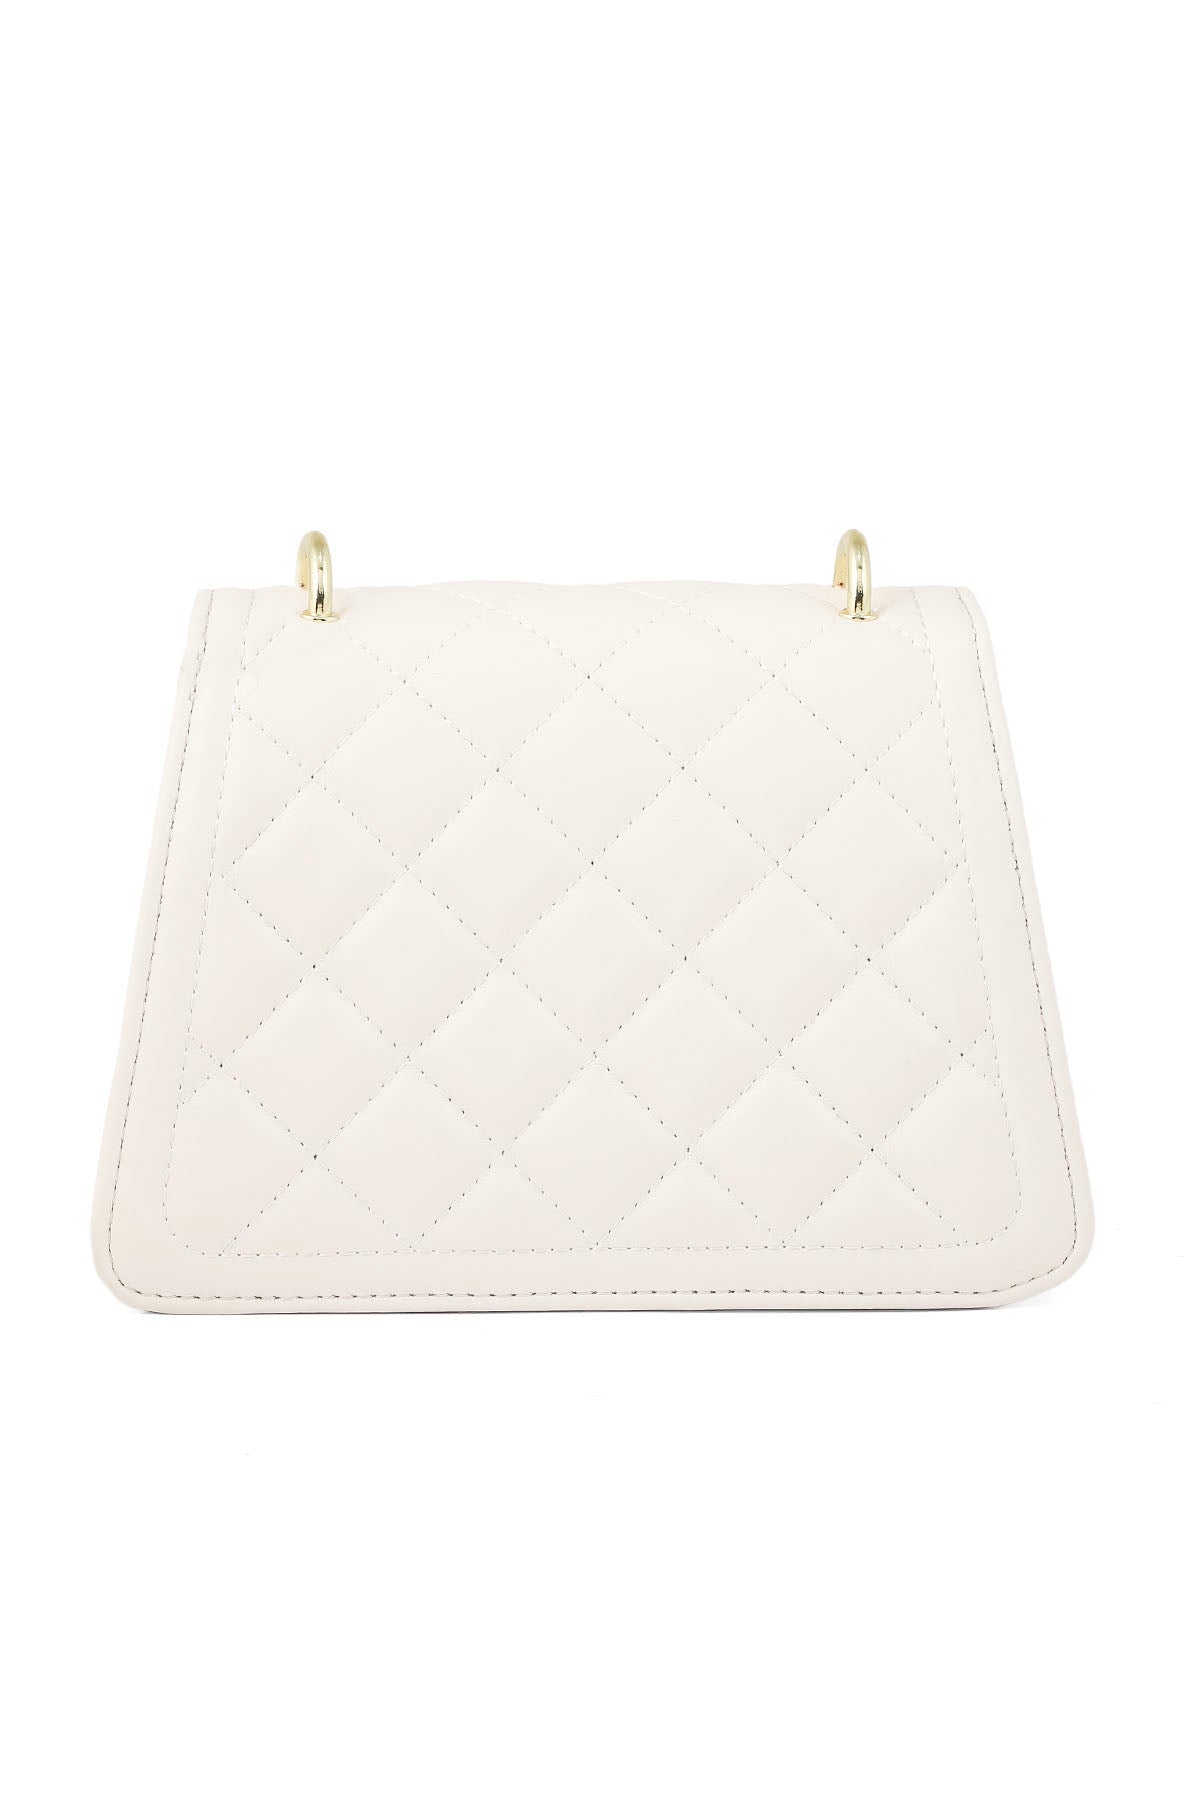 Top Handle Hand Bags B14955-White